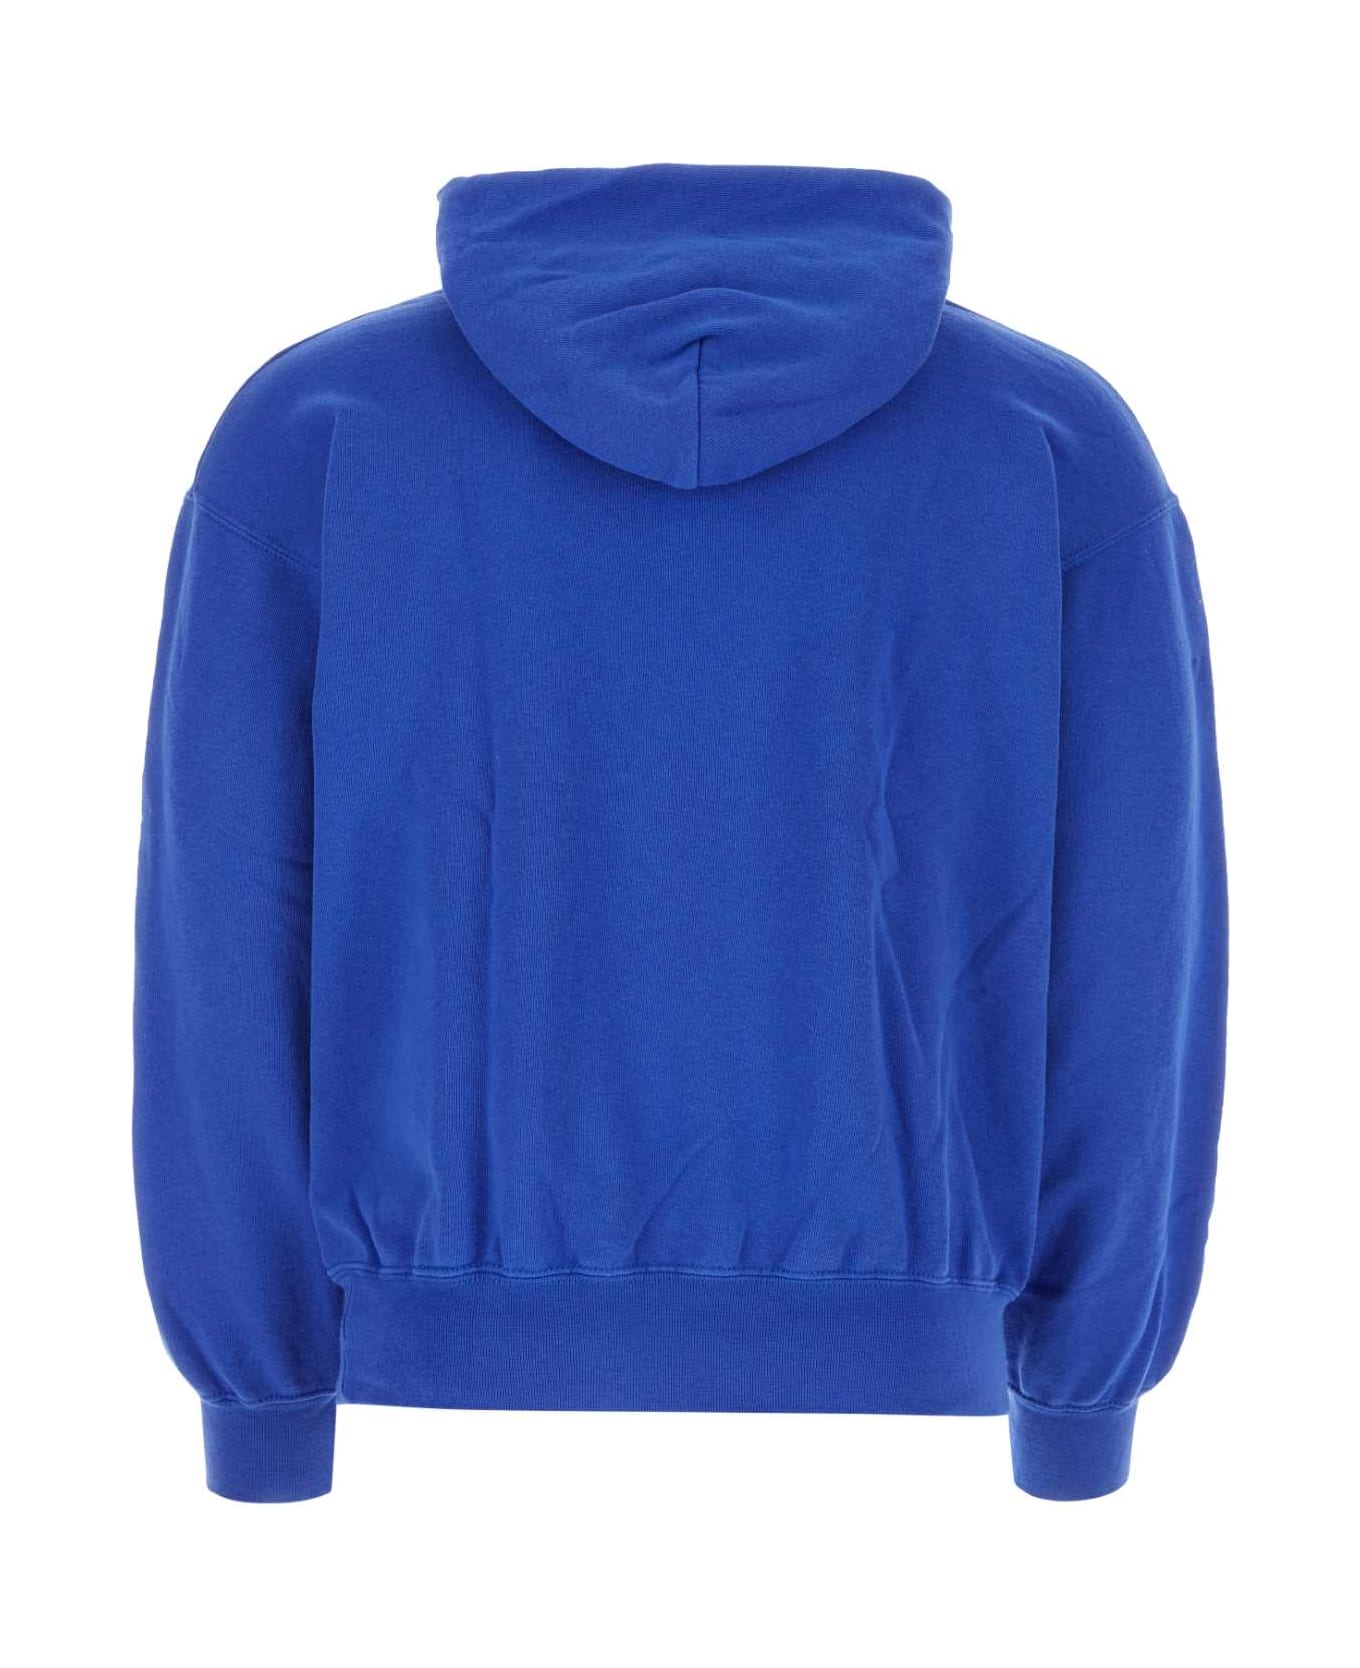 Wild Donkey Electric Blue Cotton Blend Sweatshirt - ROYBLU フリース